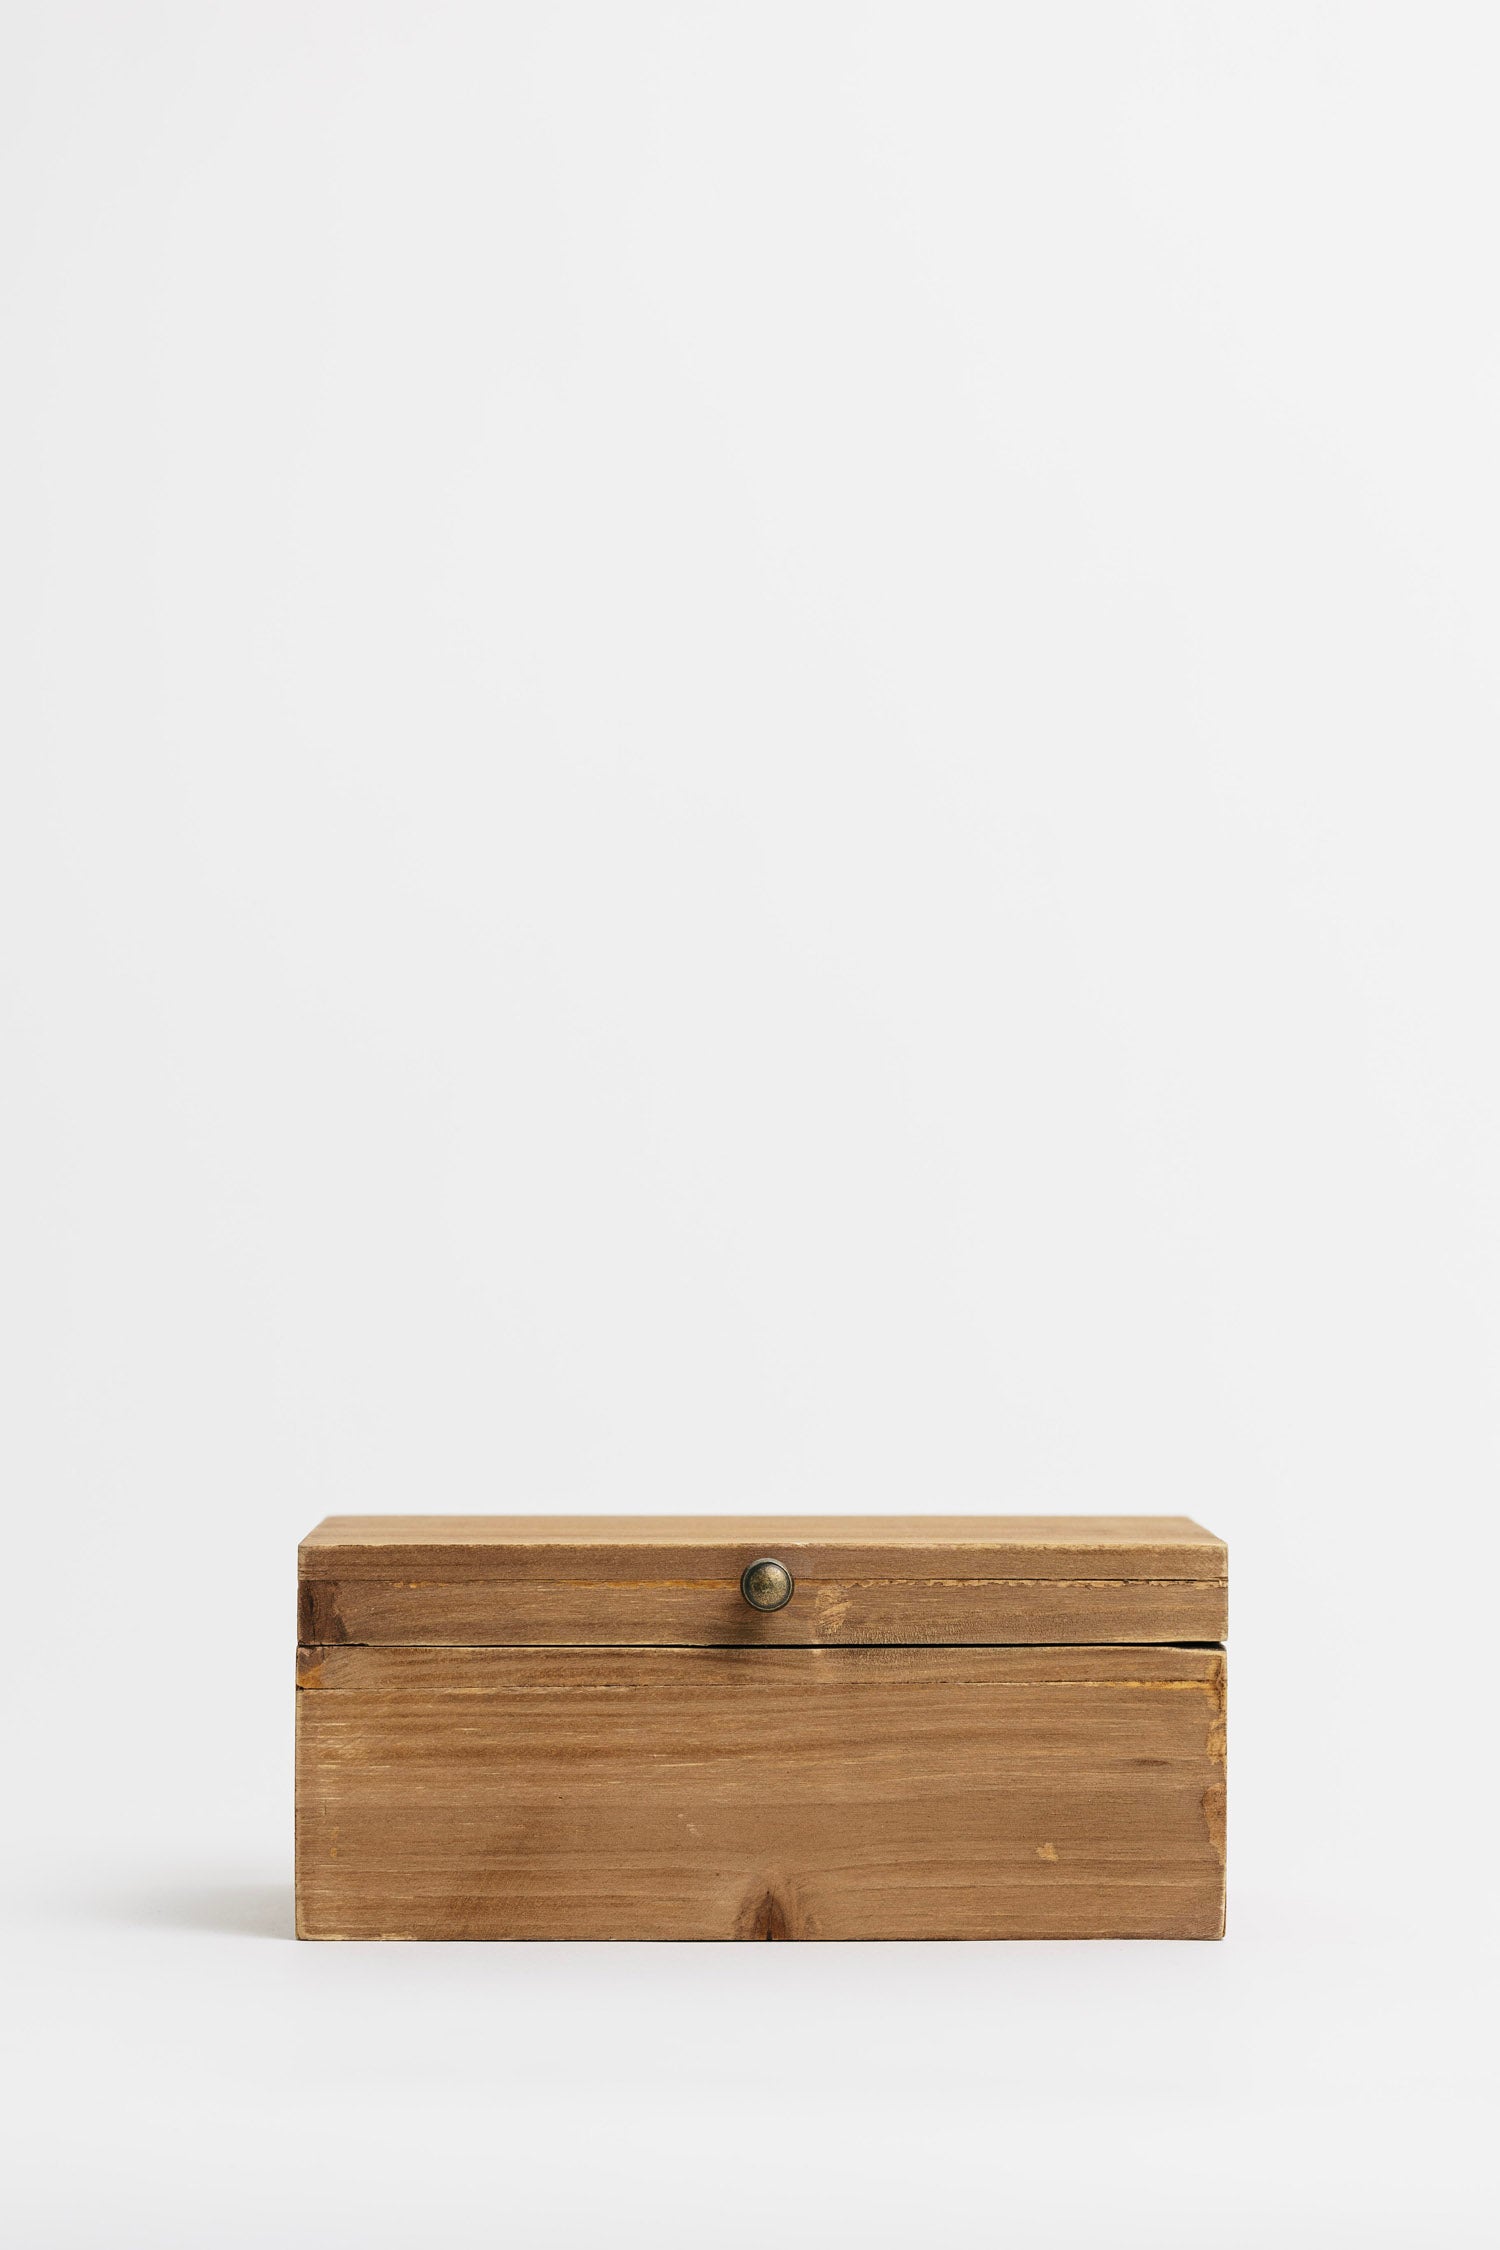 Alton Wood Box - 2 Sizes